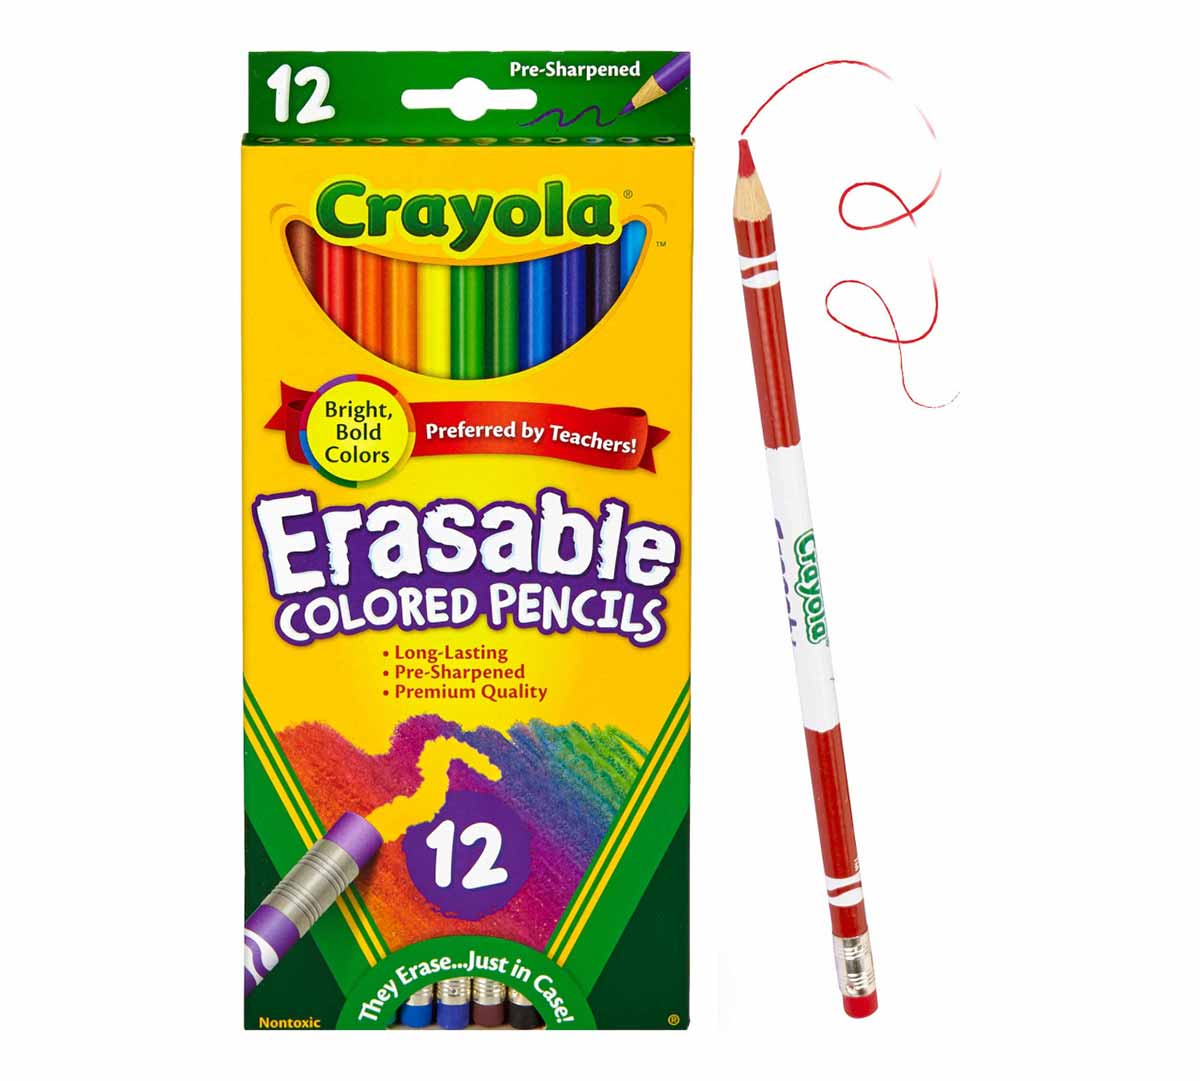  Crayola Erasable Colored Pencils, School Supplies, 12 Pack of  12 Count : Toys & Games